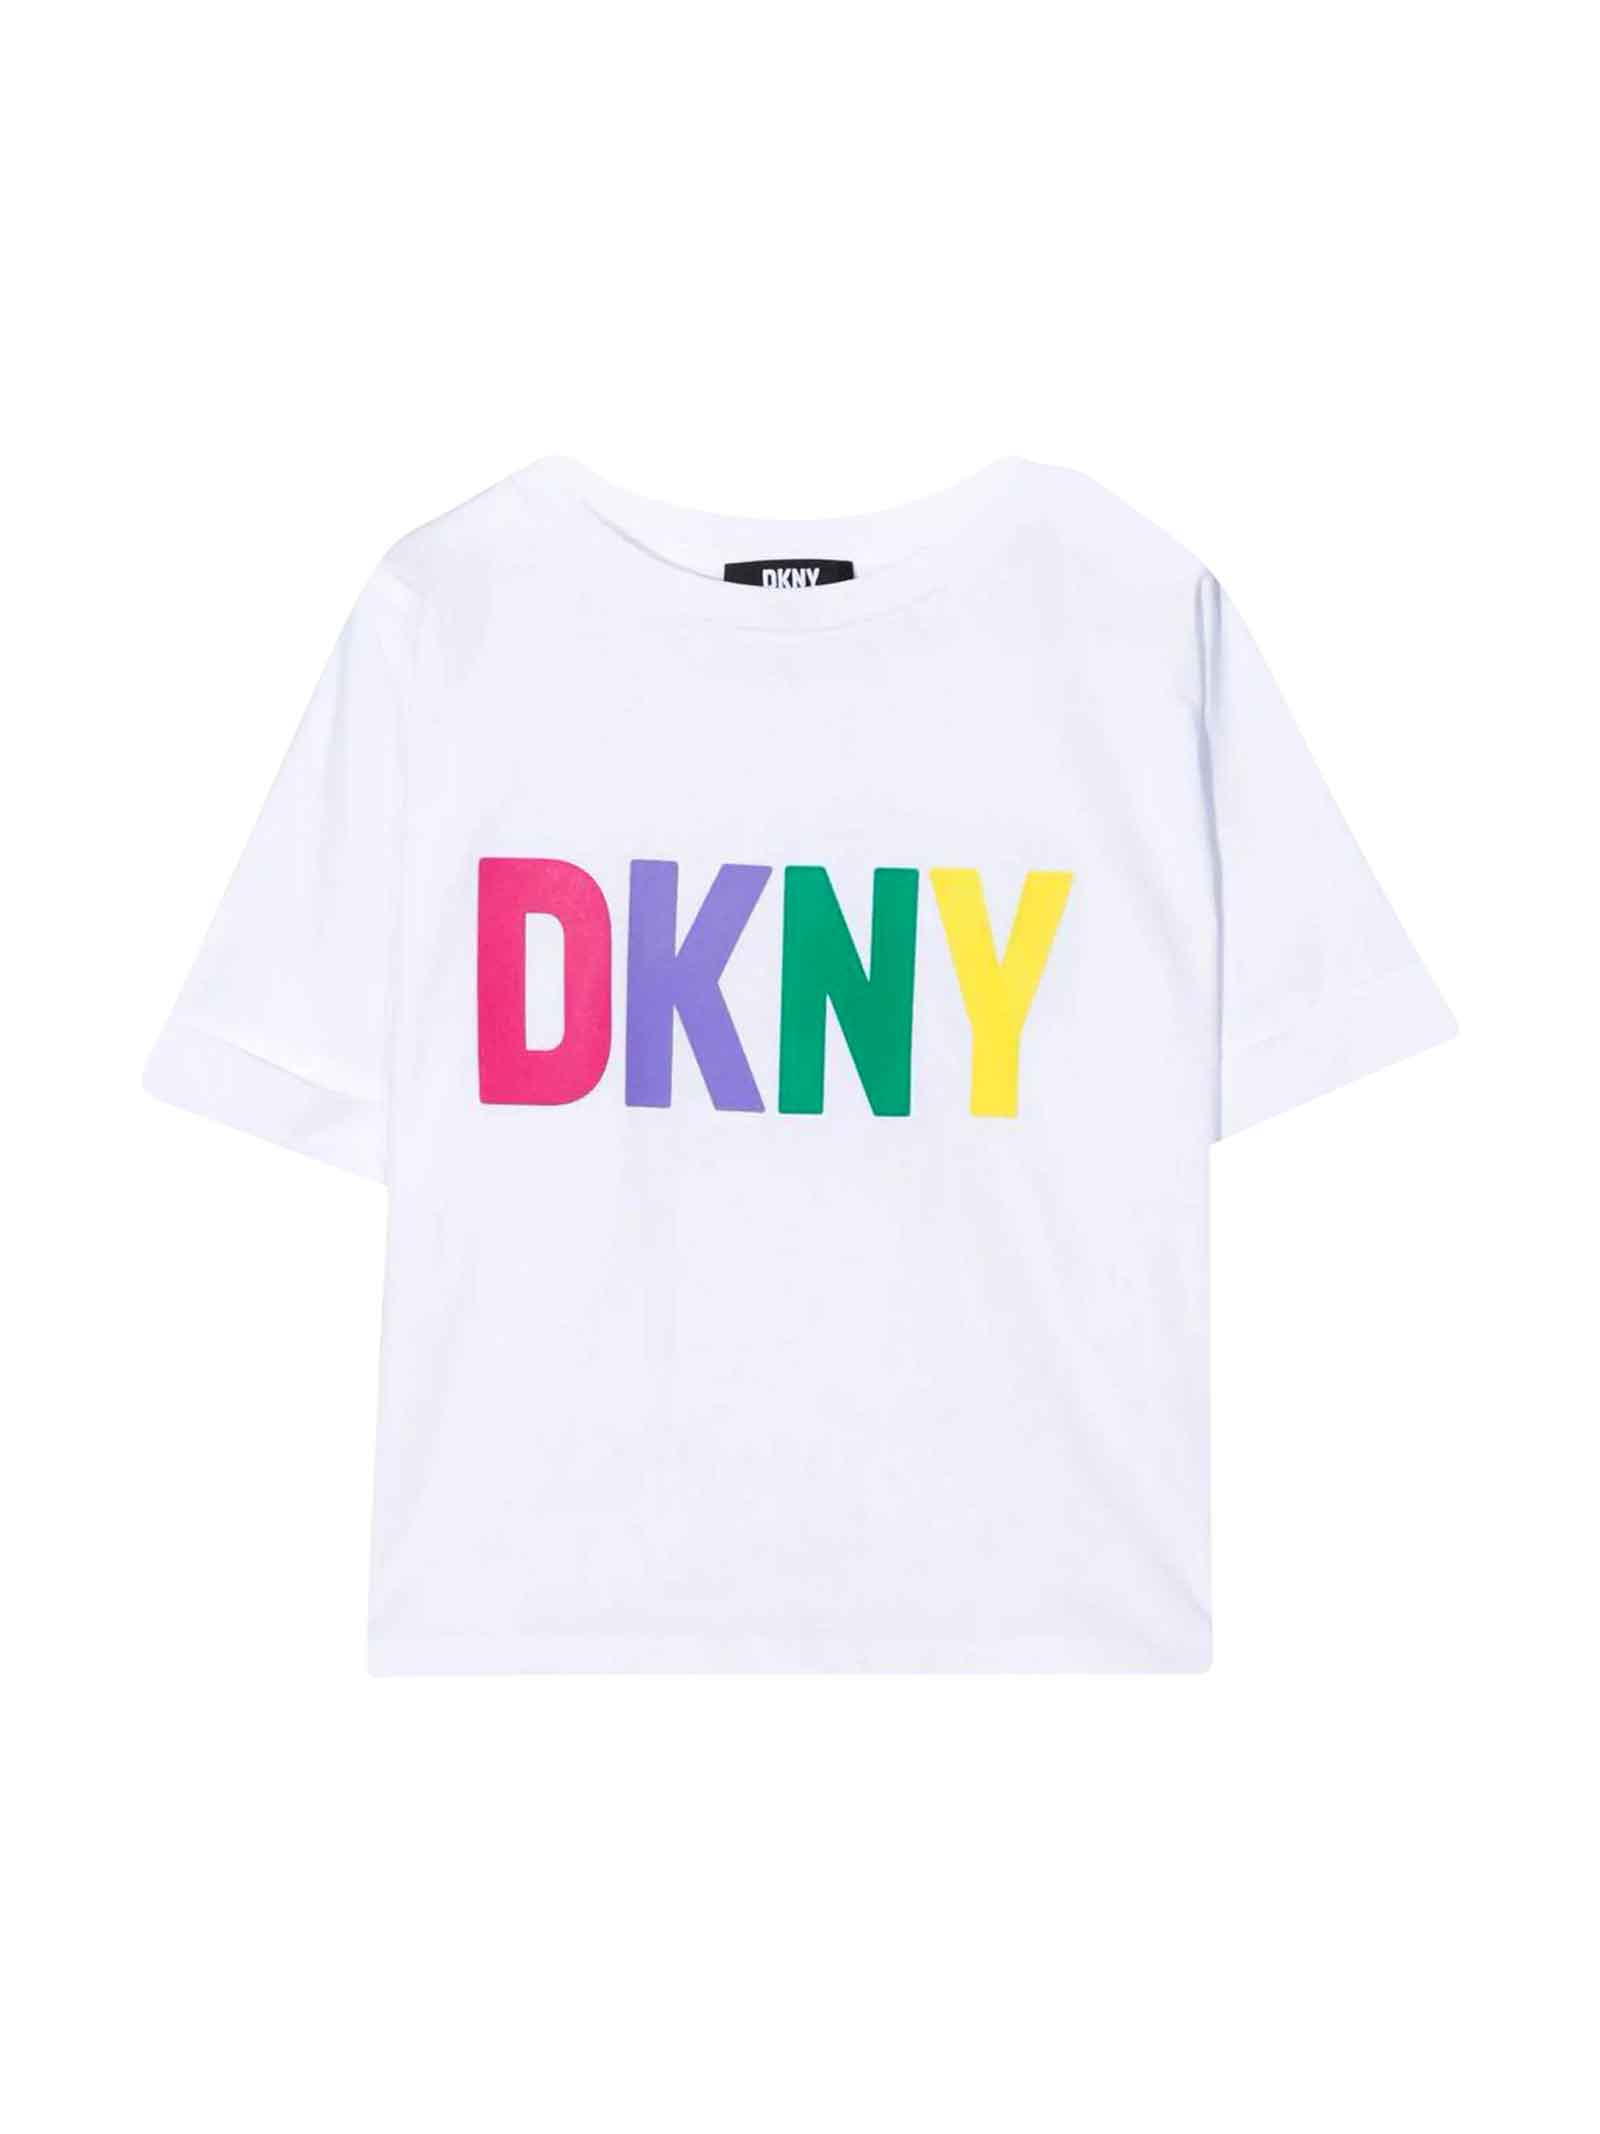 DKNY White T-shirt Unisex.